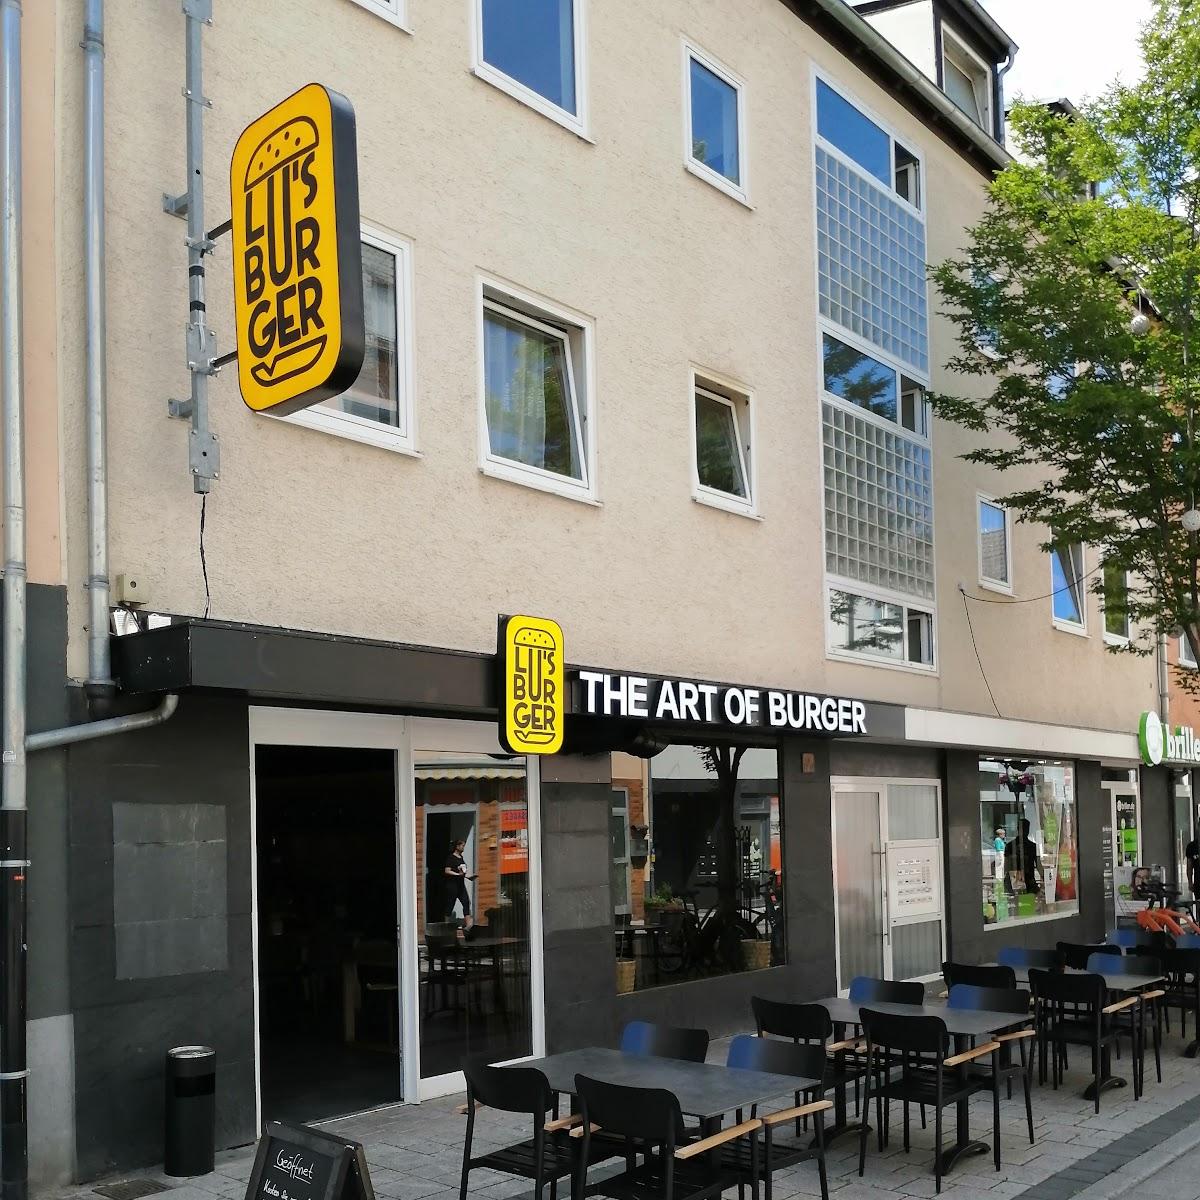 Restaurant "Lus Burger" in Hanau